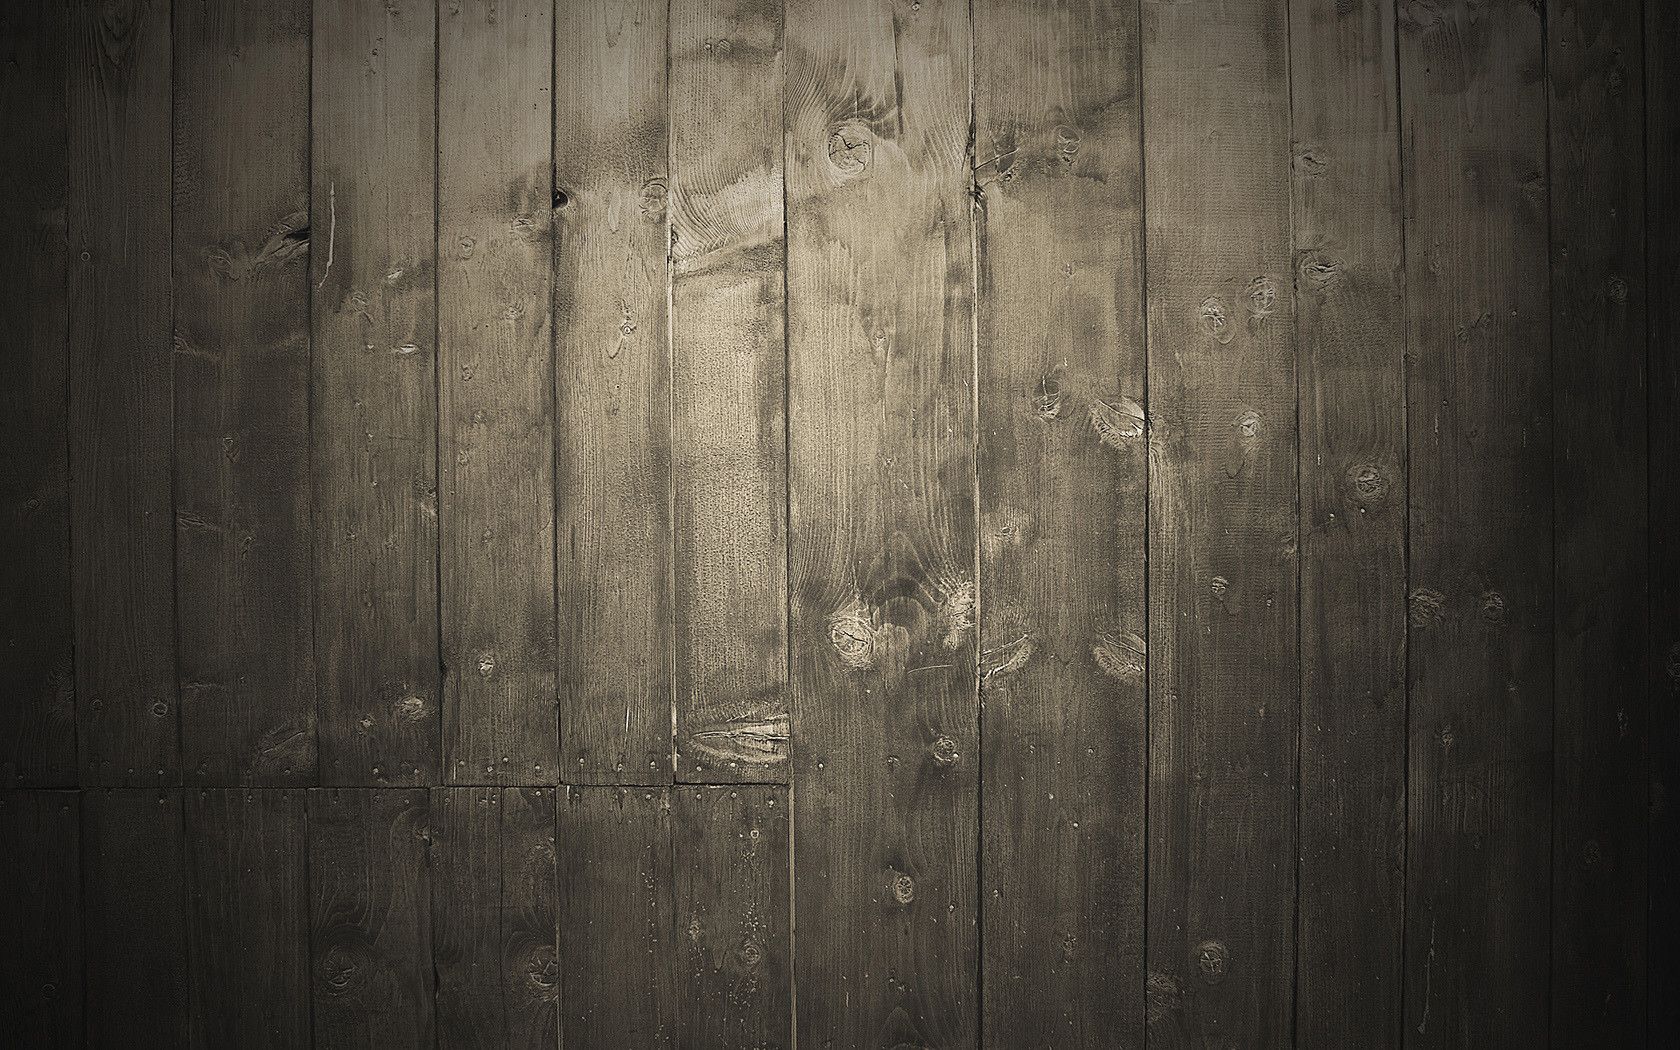 Hd wood texture wallpaper